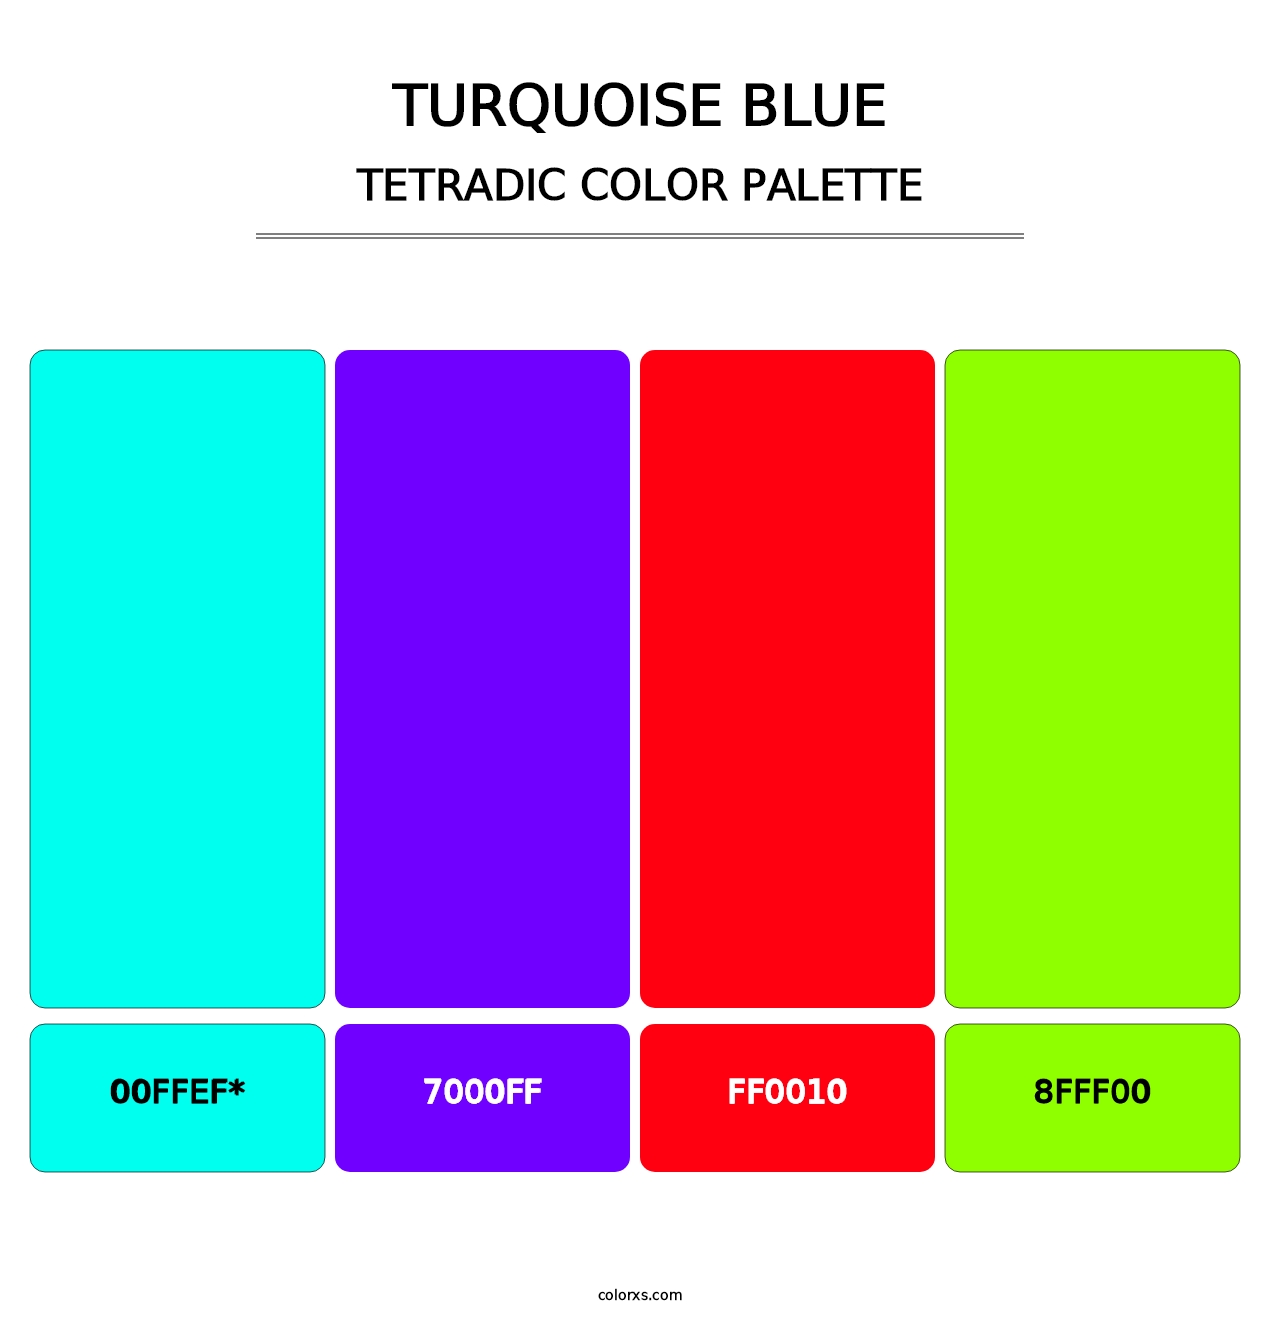 Turquoise Blue - Tetradic Color Palette